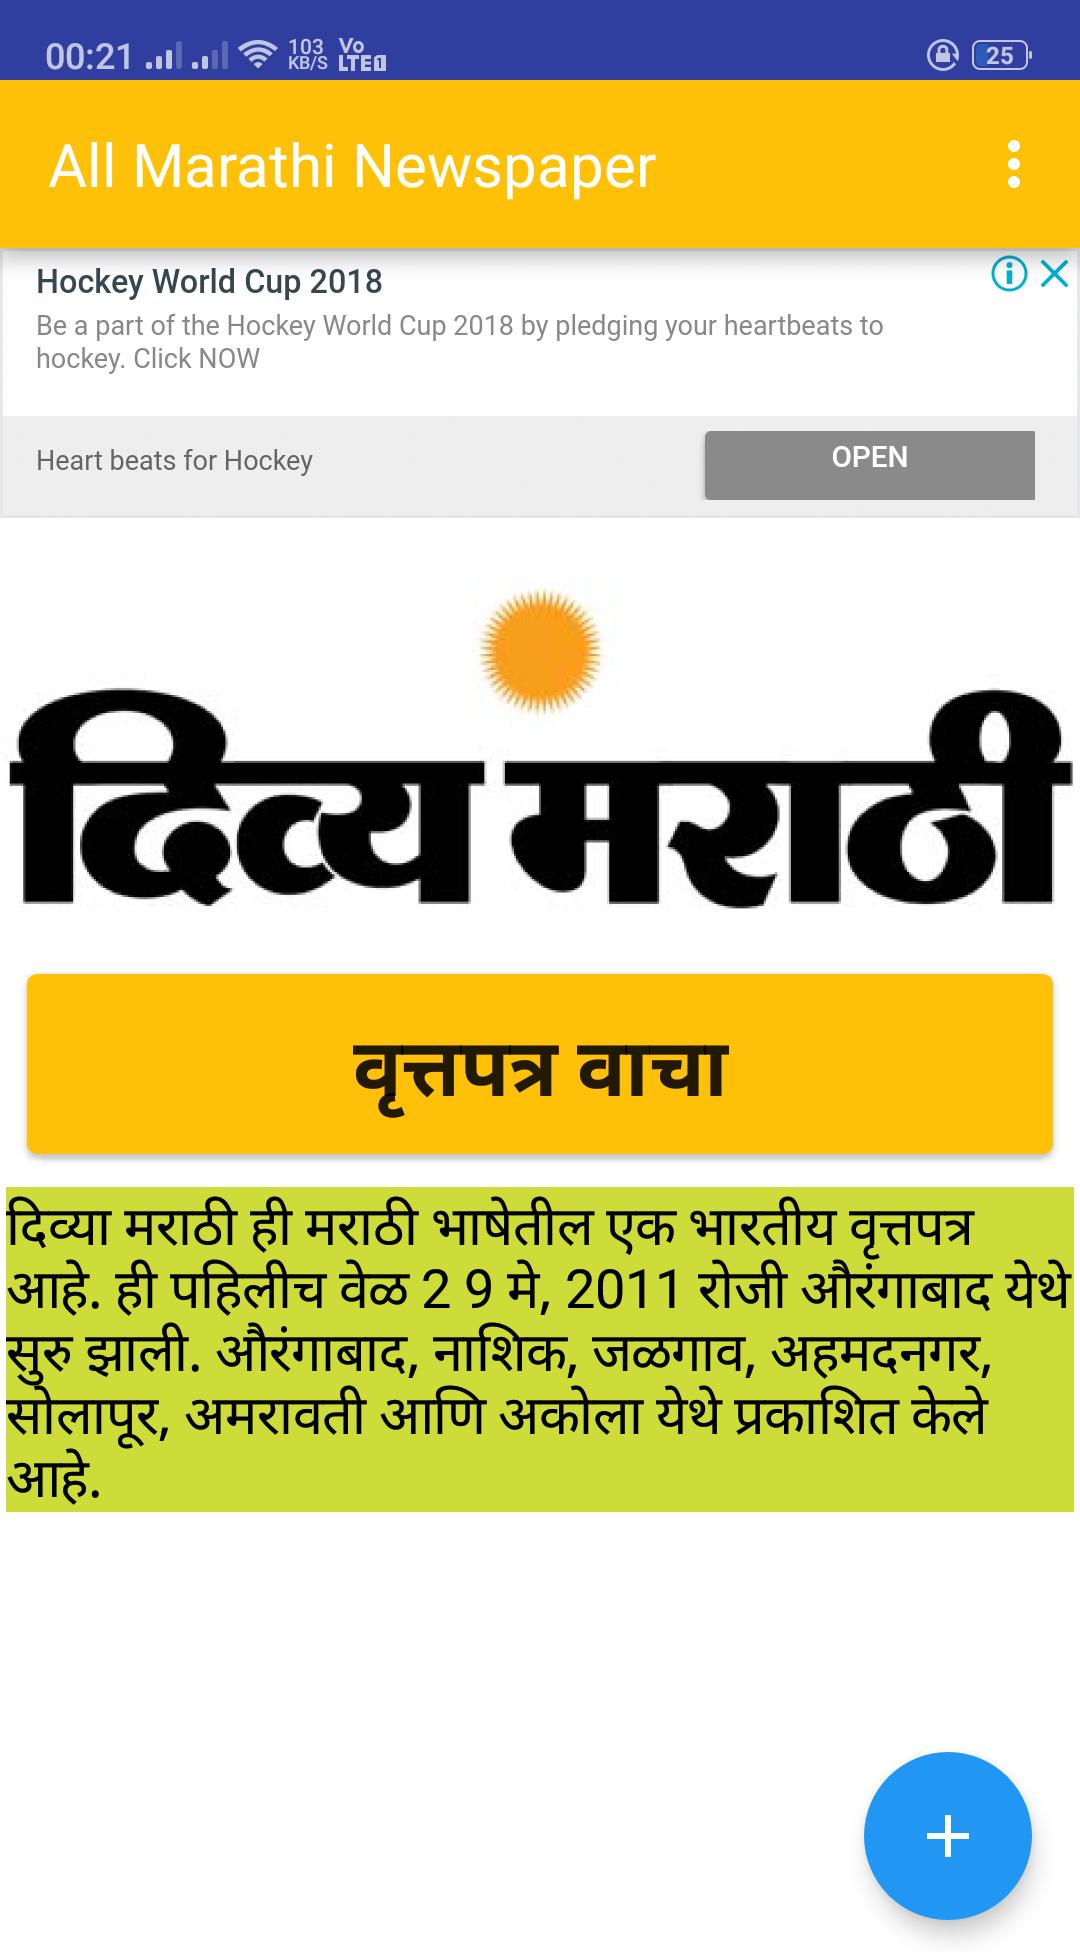 Marathi News - All Daily Marathi Newspaper Epapers